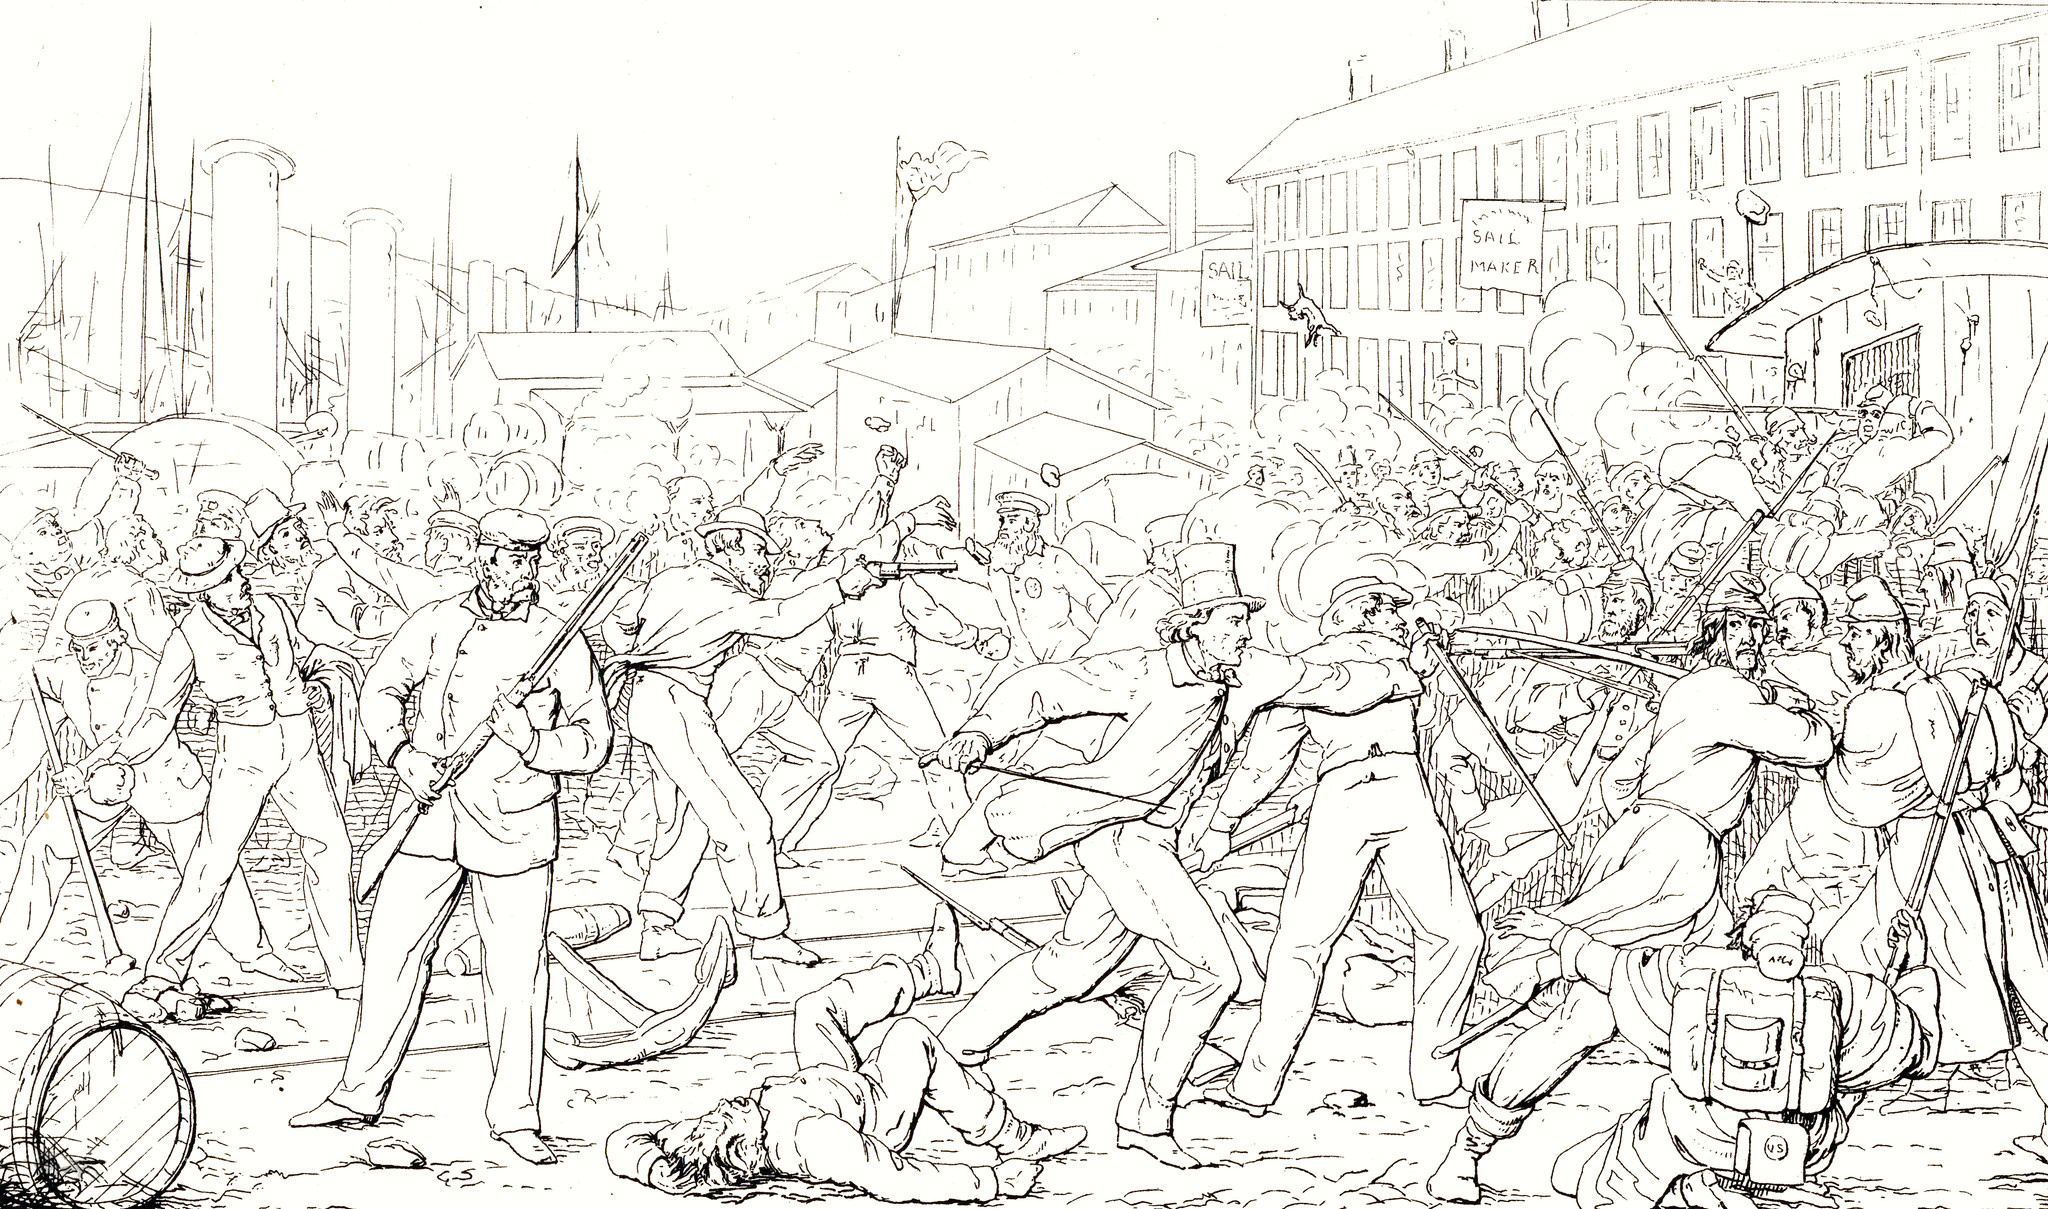 Battle in Baltimore, April 19, 1861